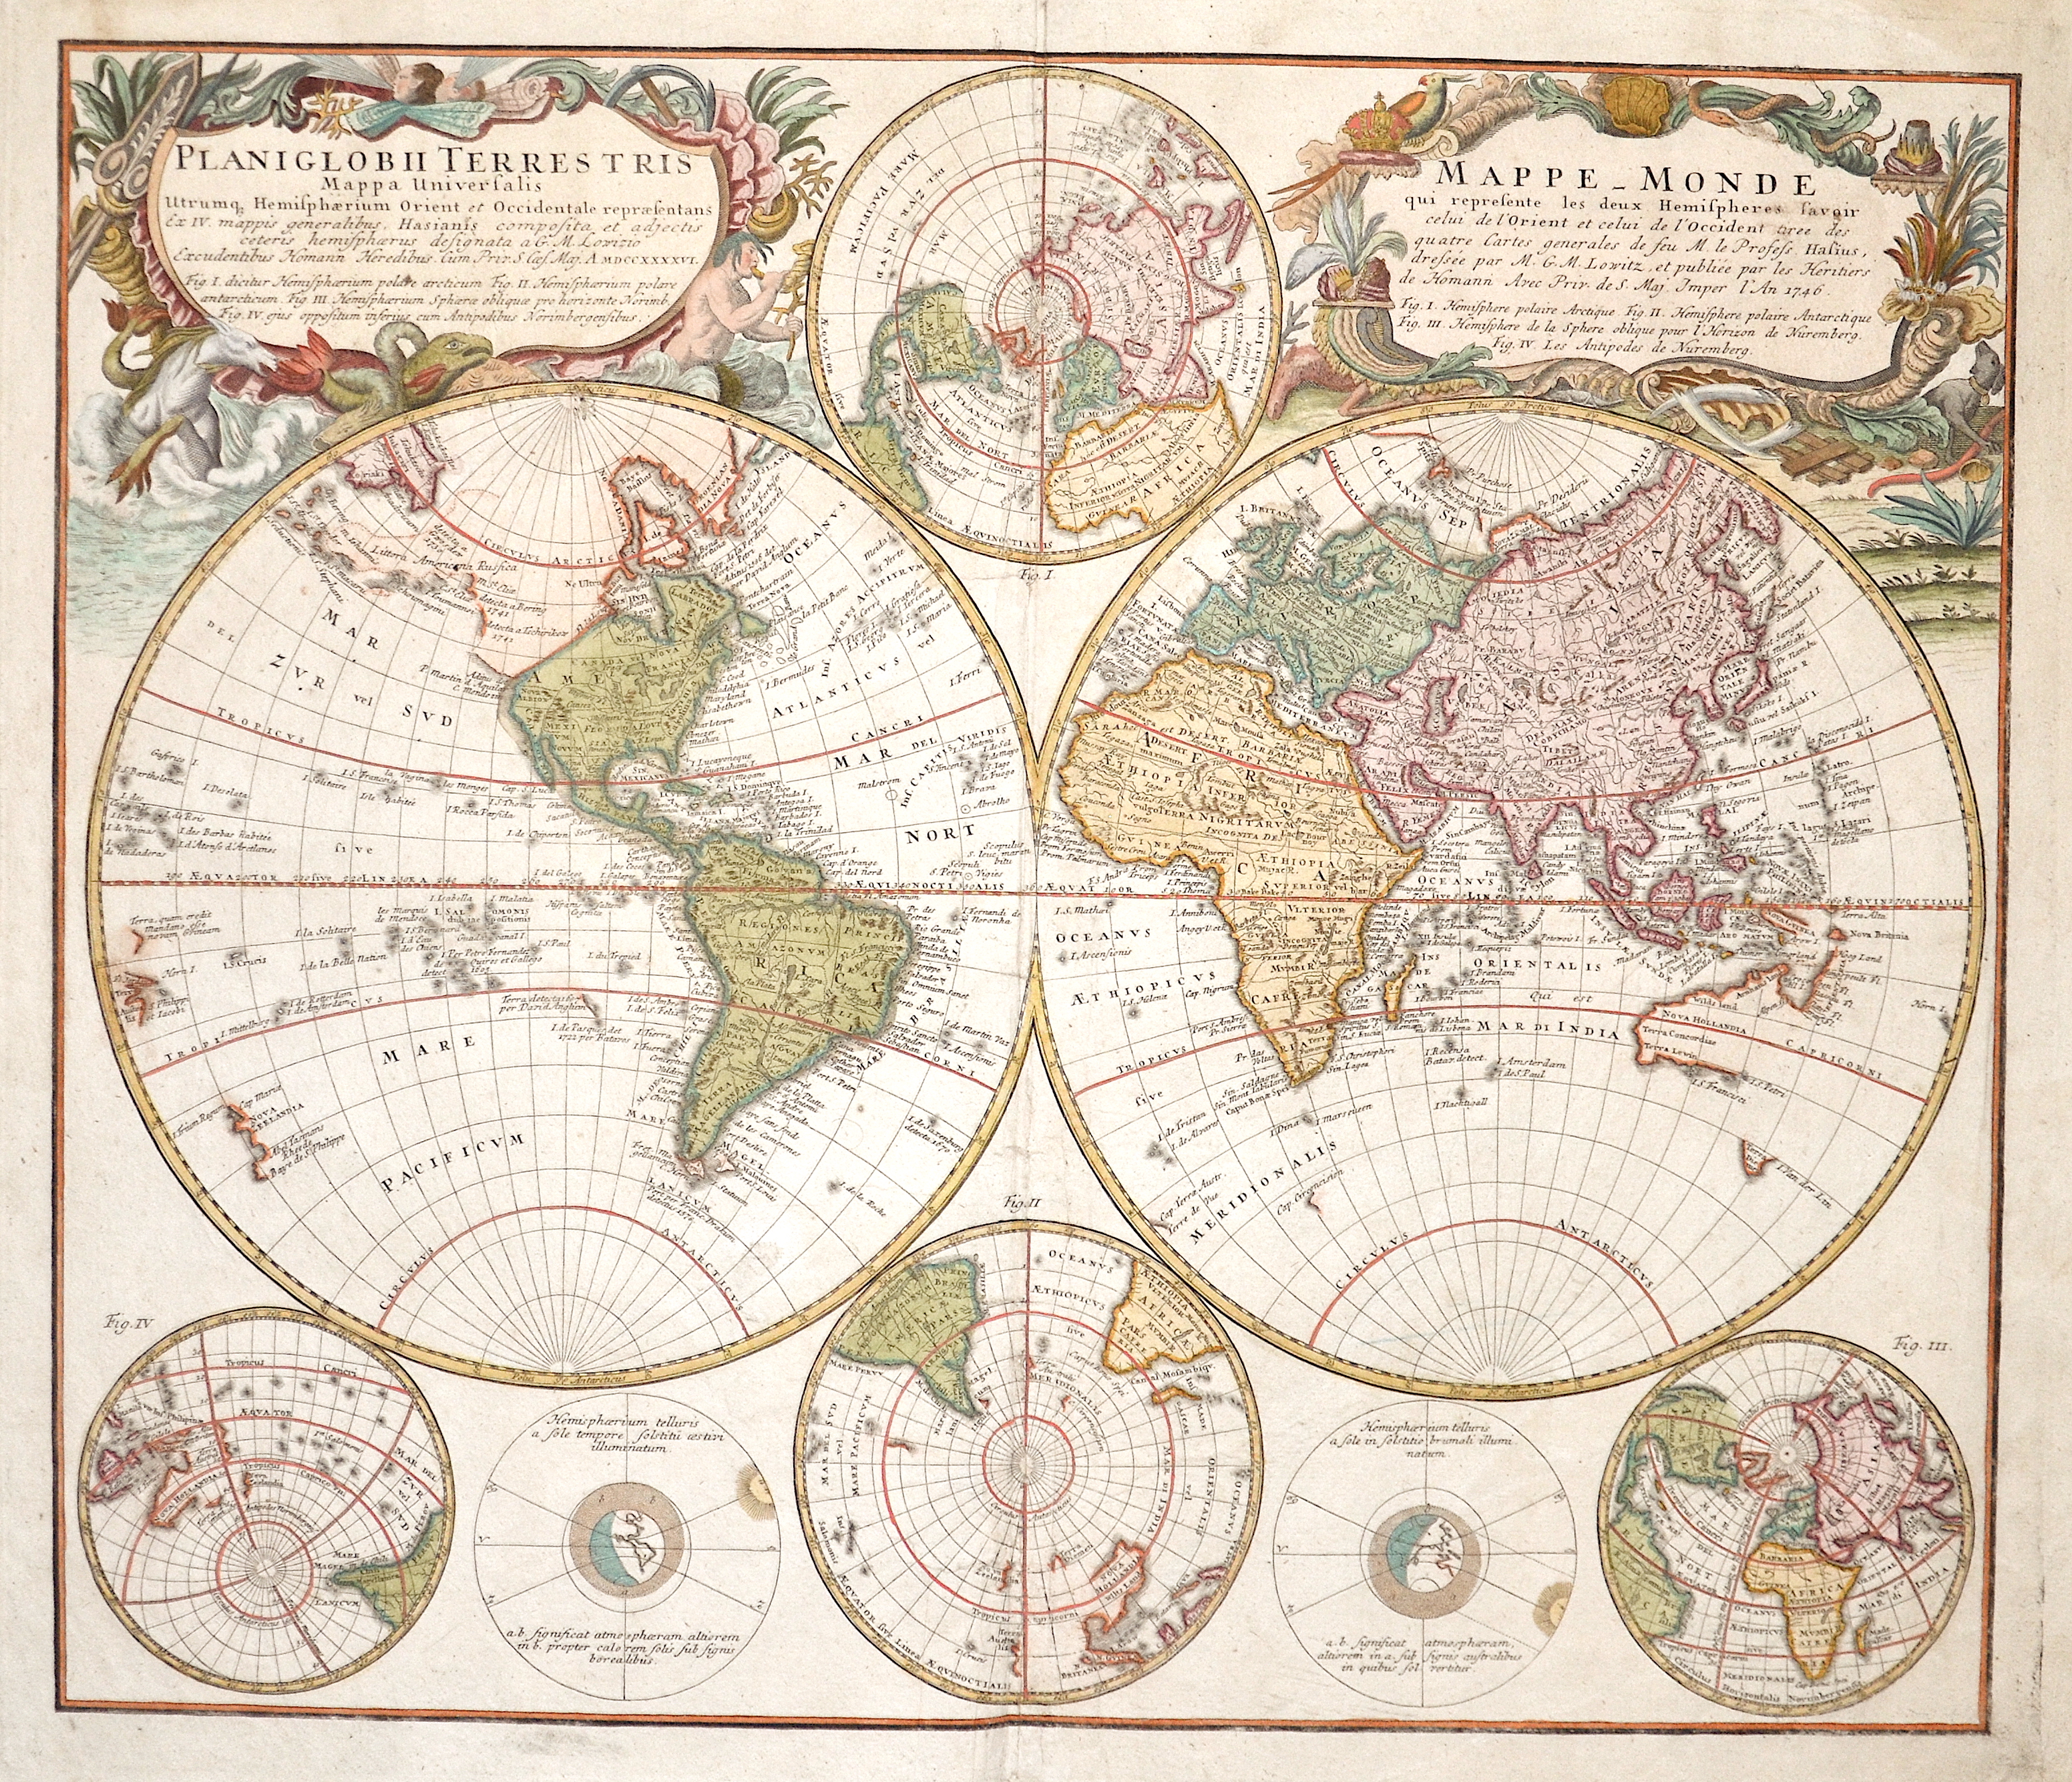 Homann Erben  Planiglobii Terrestris  Mappa niversalis/ Mappe Monde